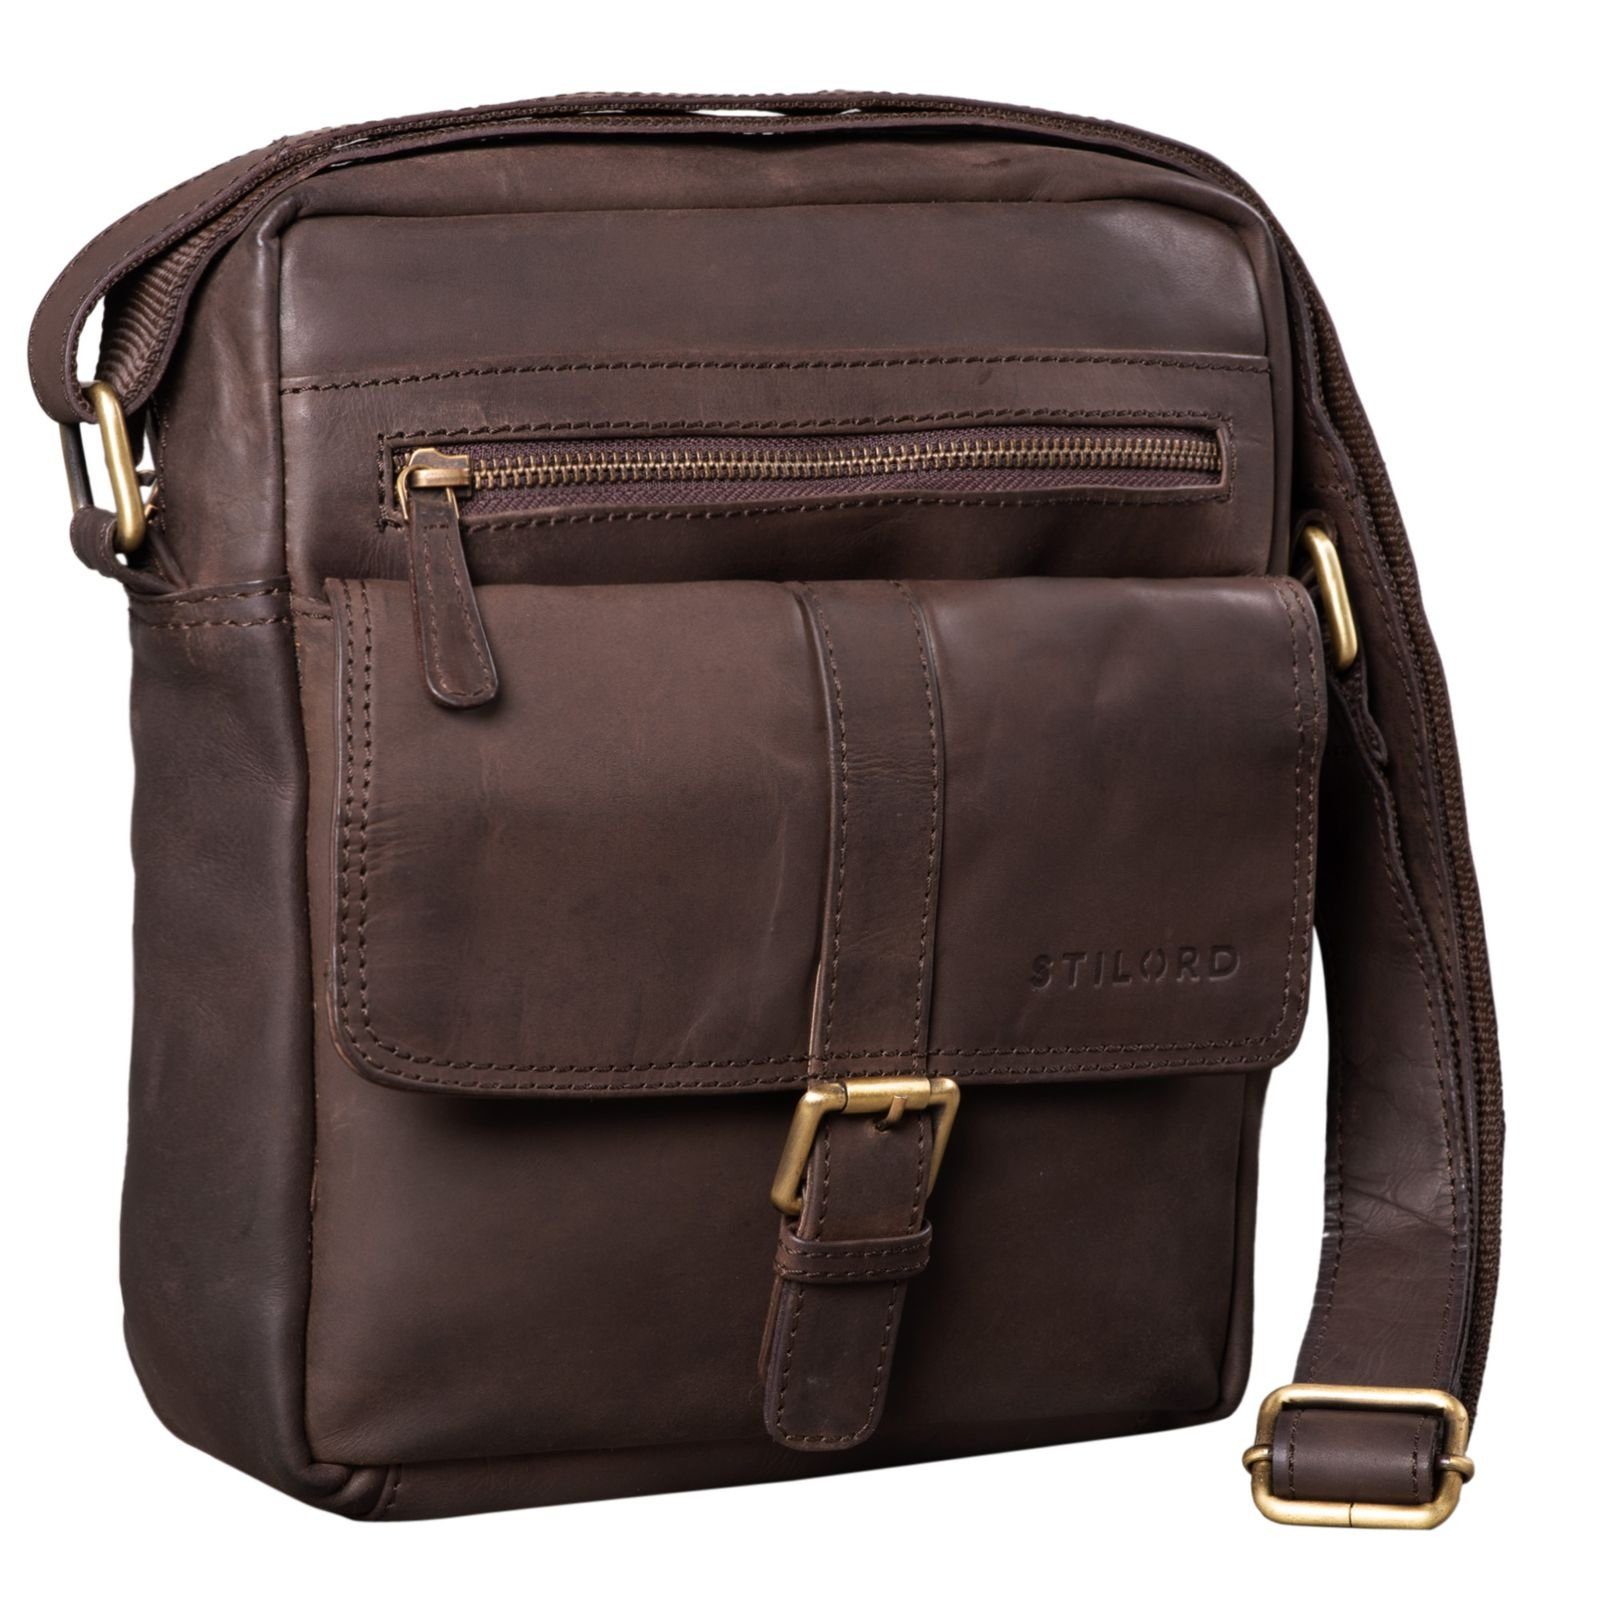 STILORD Messenger Bag "Dany" Kleine matt Umhängen dunkelbraun Tasche zum Leder 